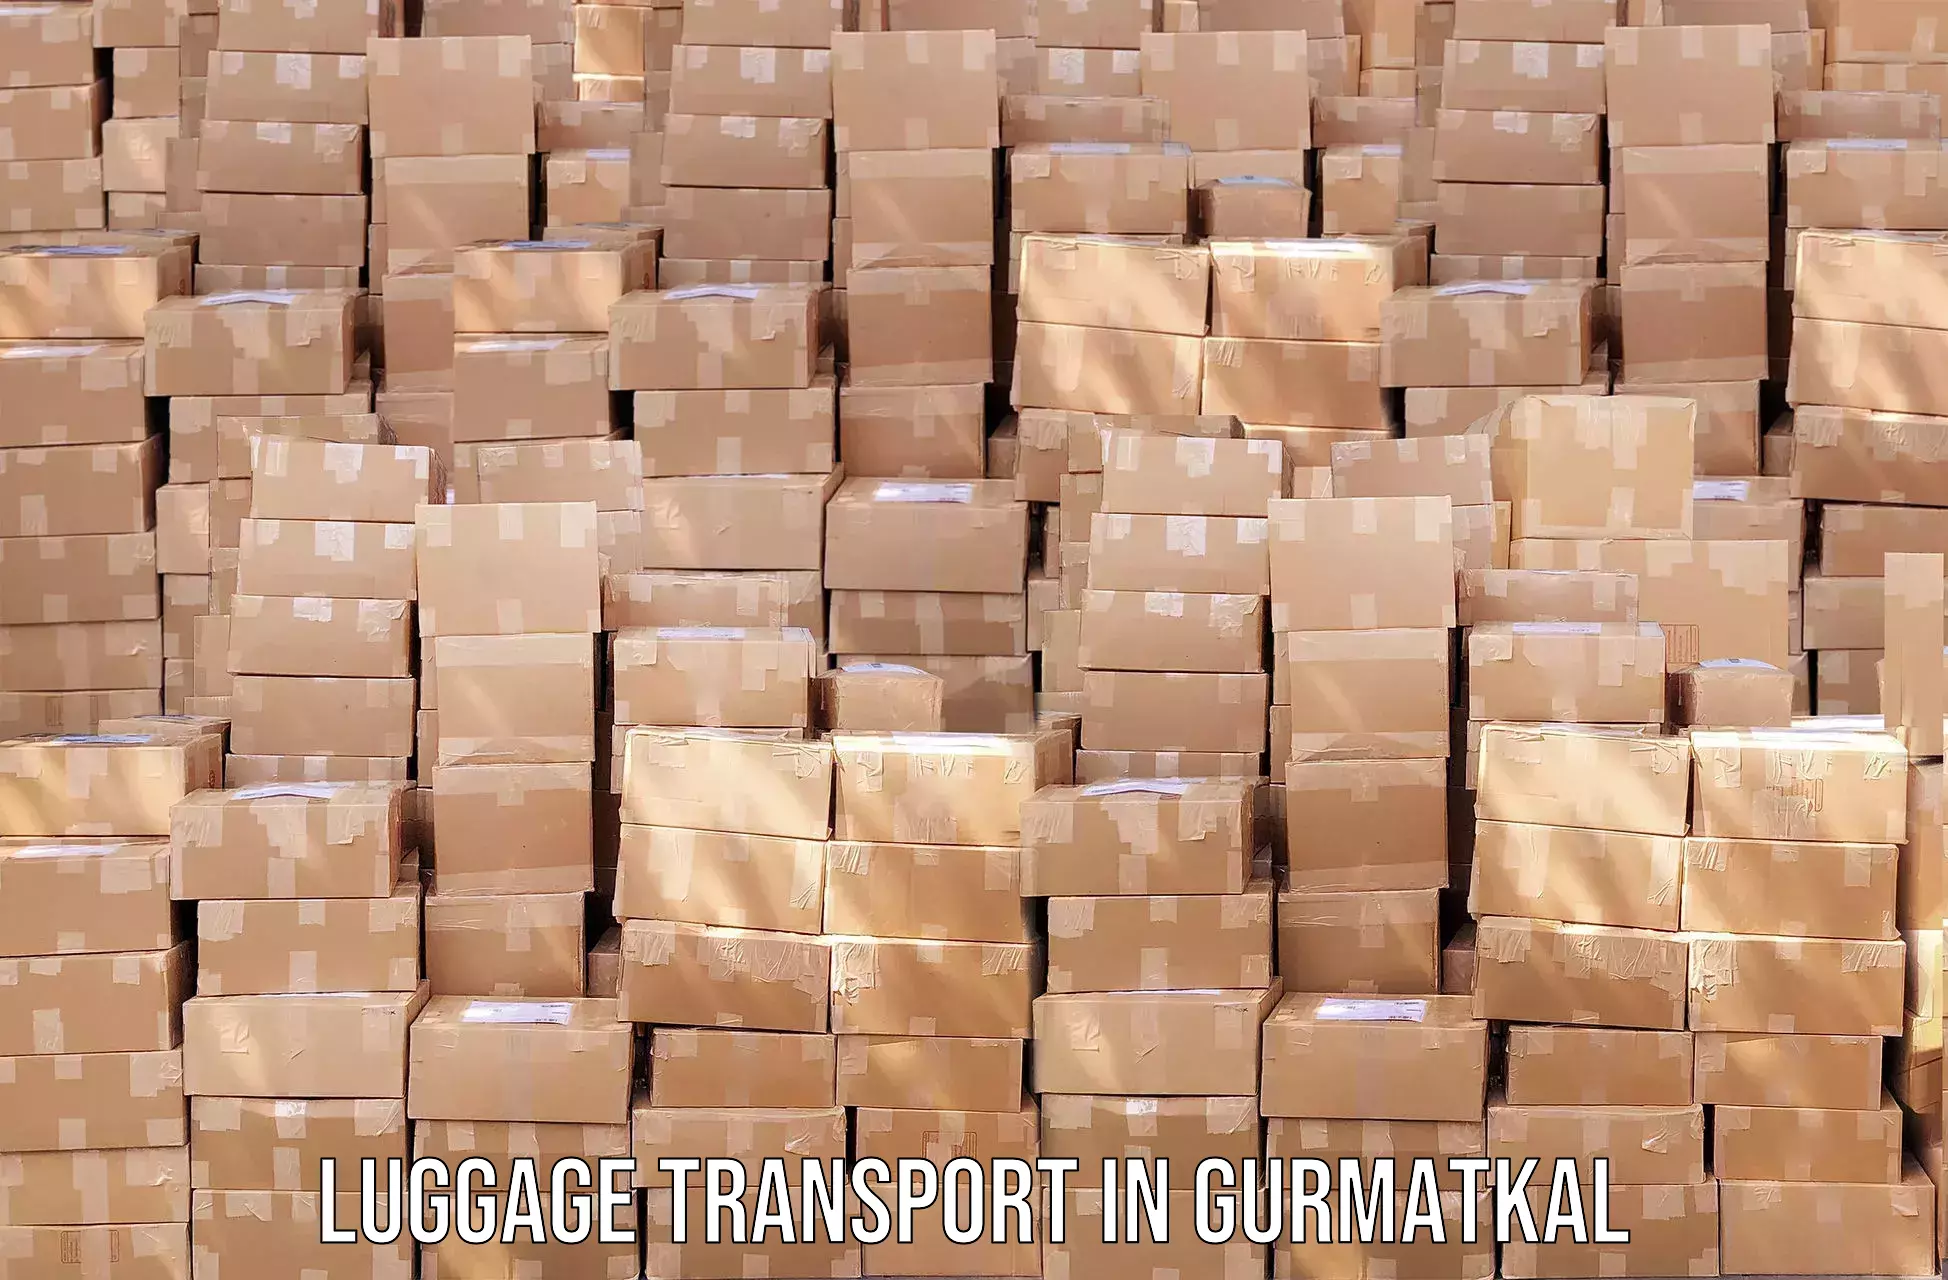 Baggage transport management in Gurmatkal